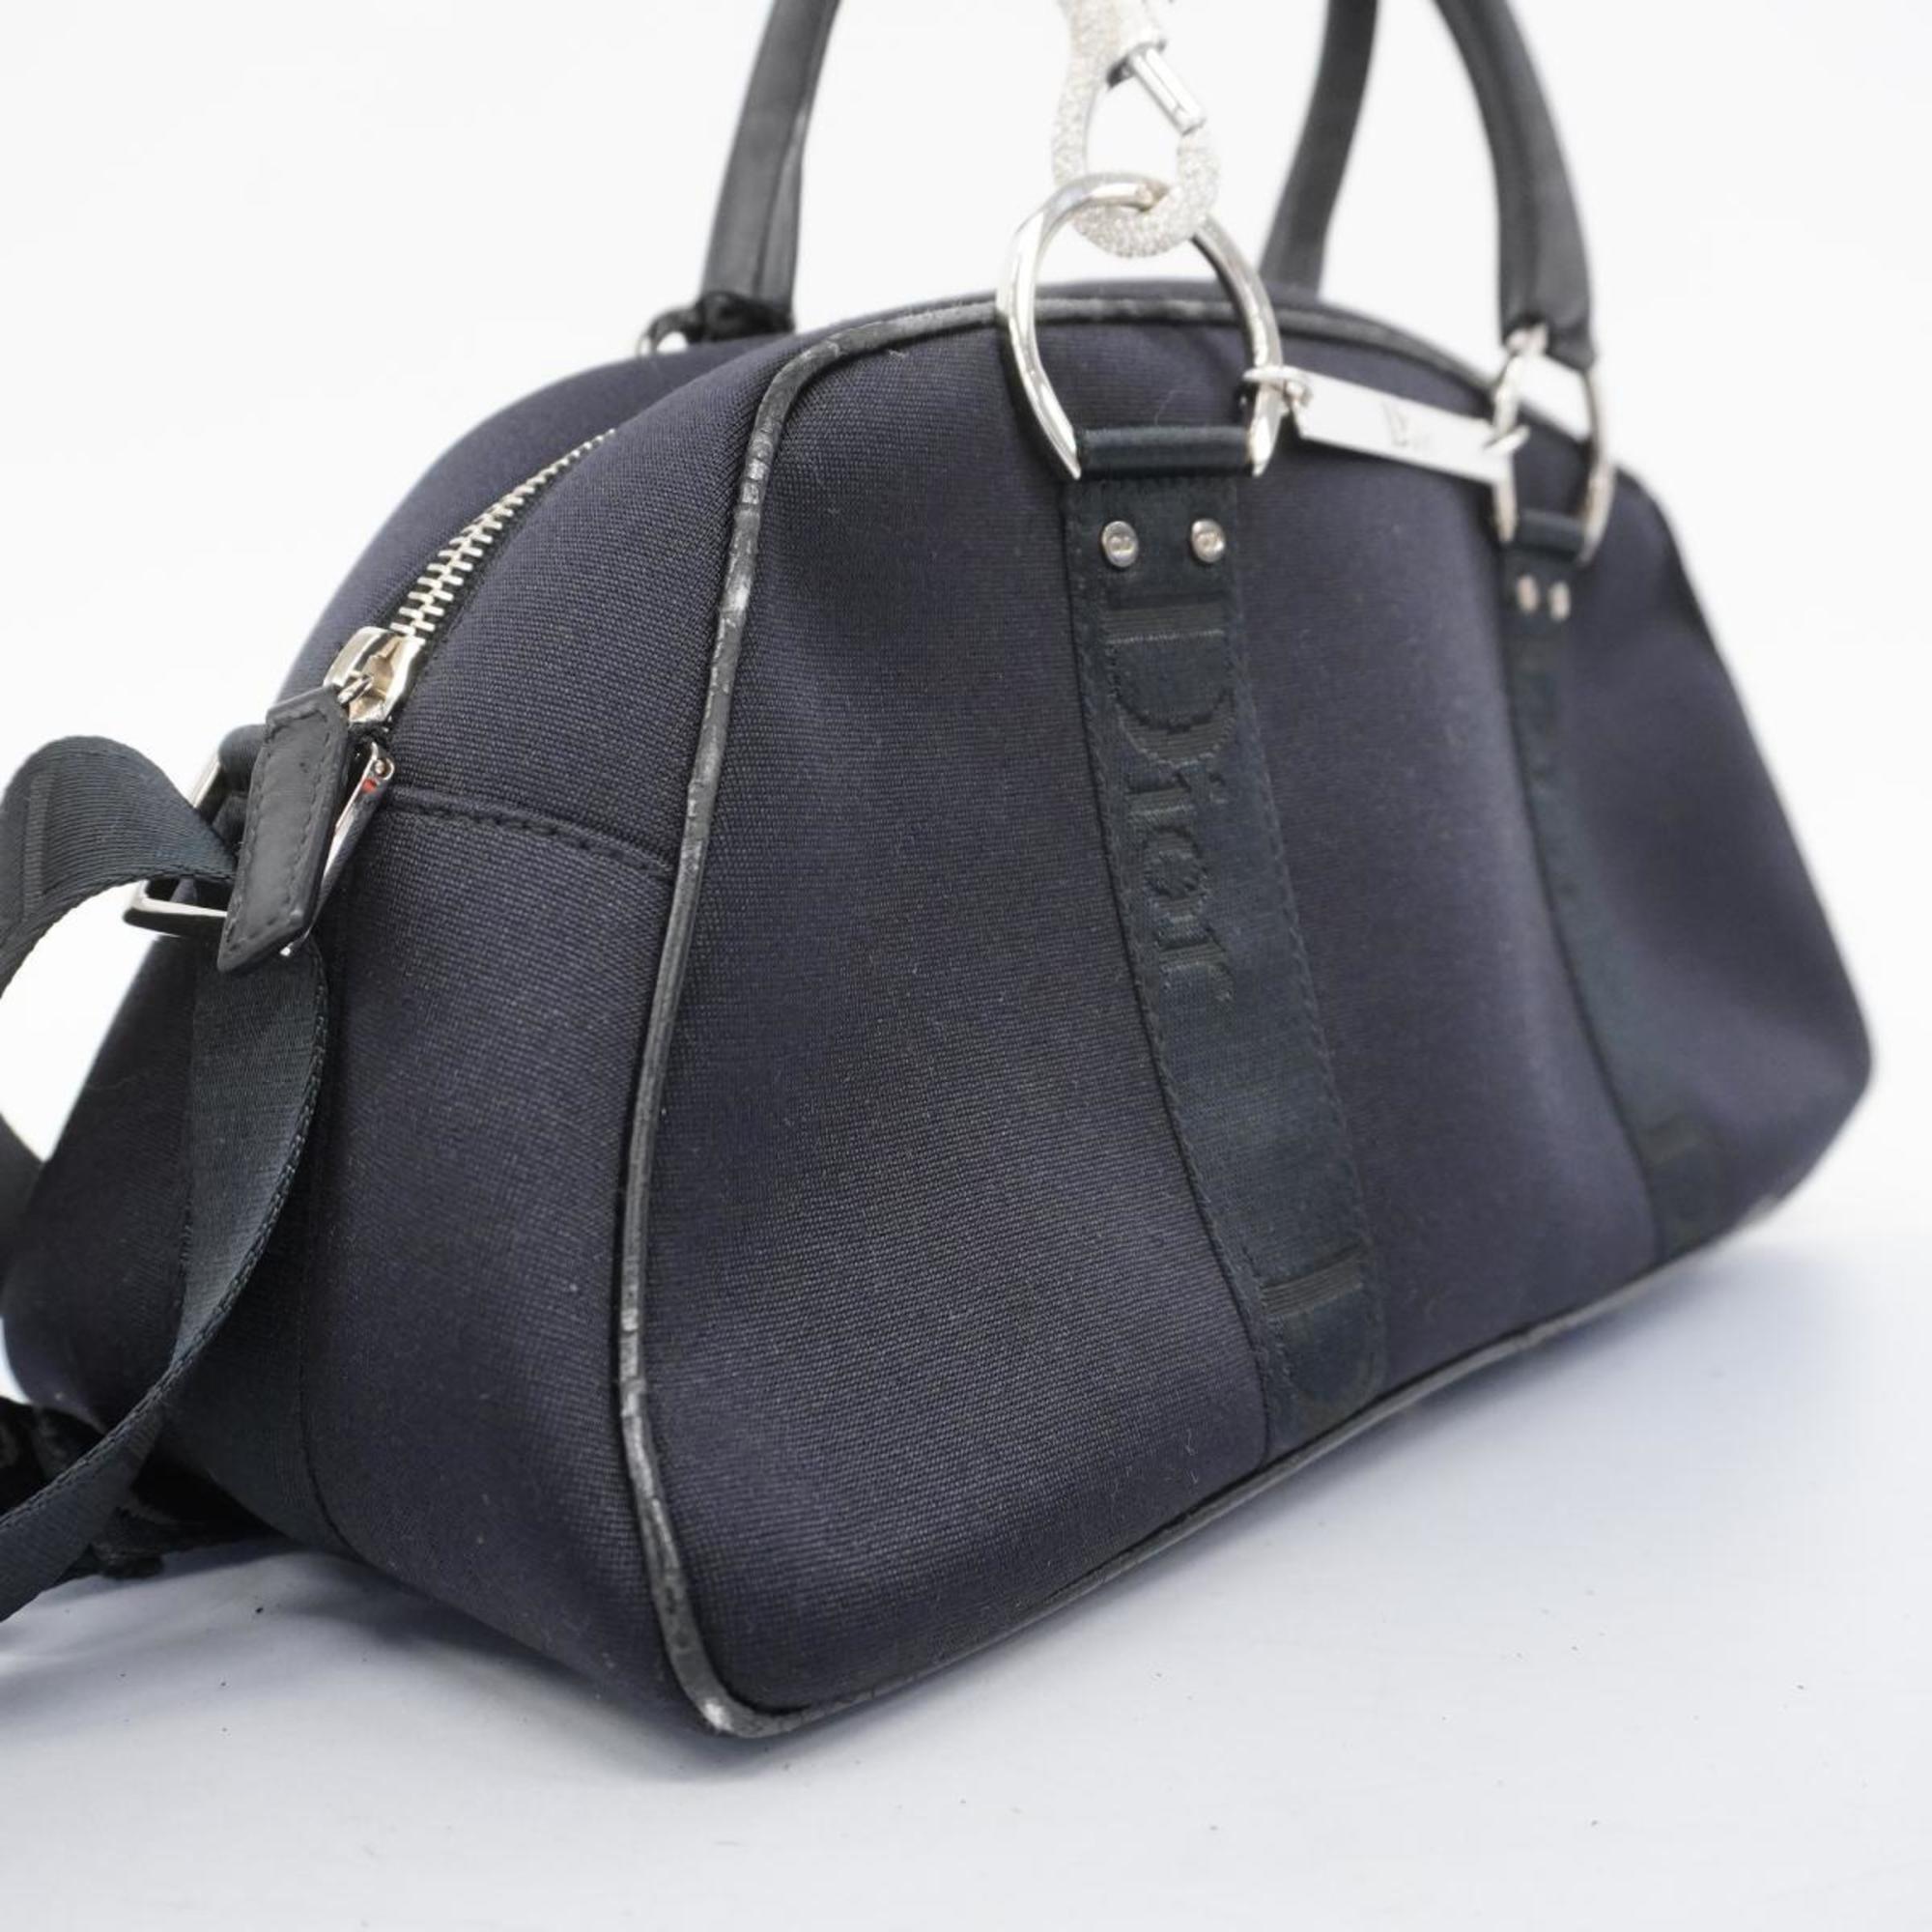 Christian Dior Handbag Canvas Black Women's